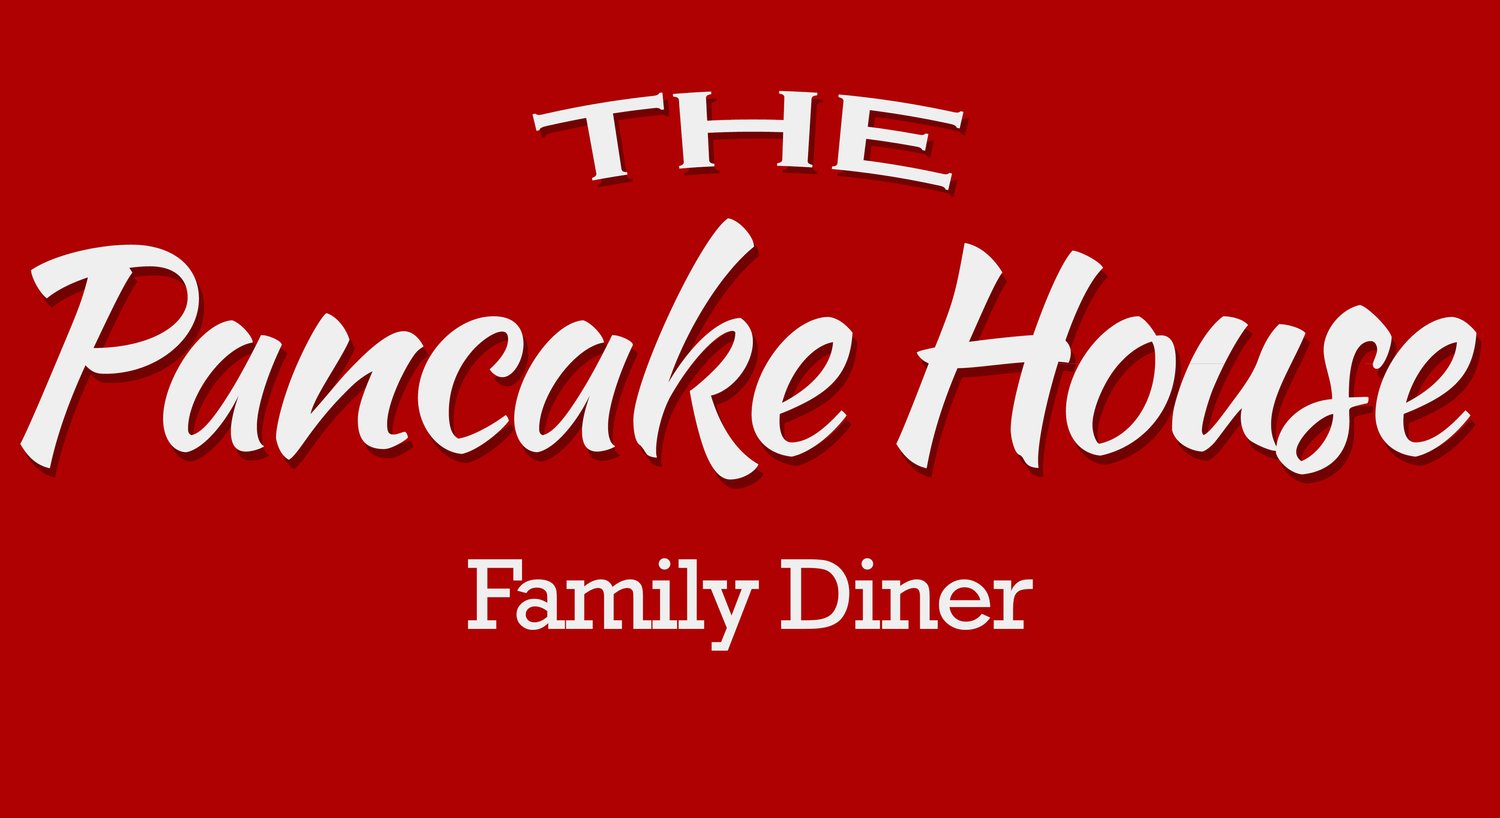 The Pancake House Family Diner